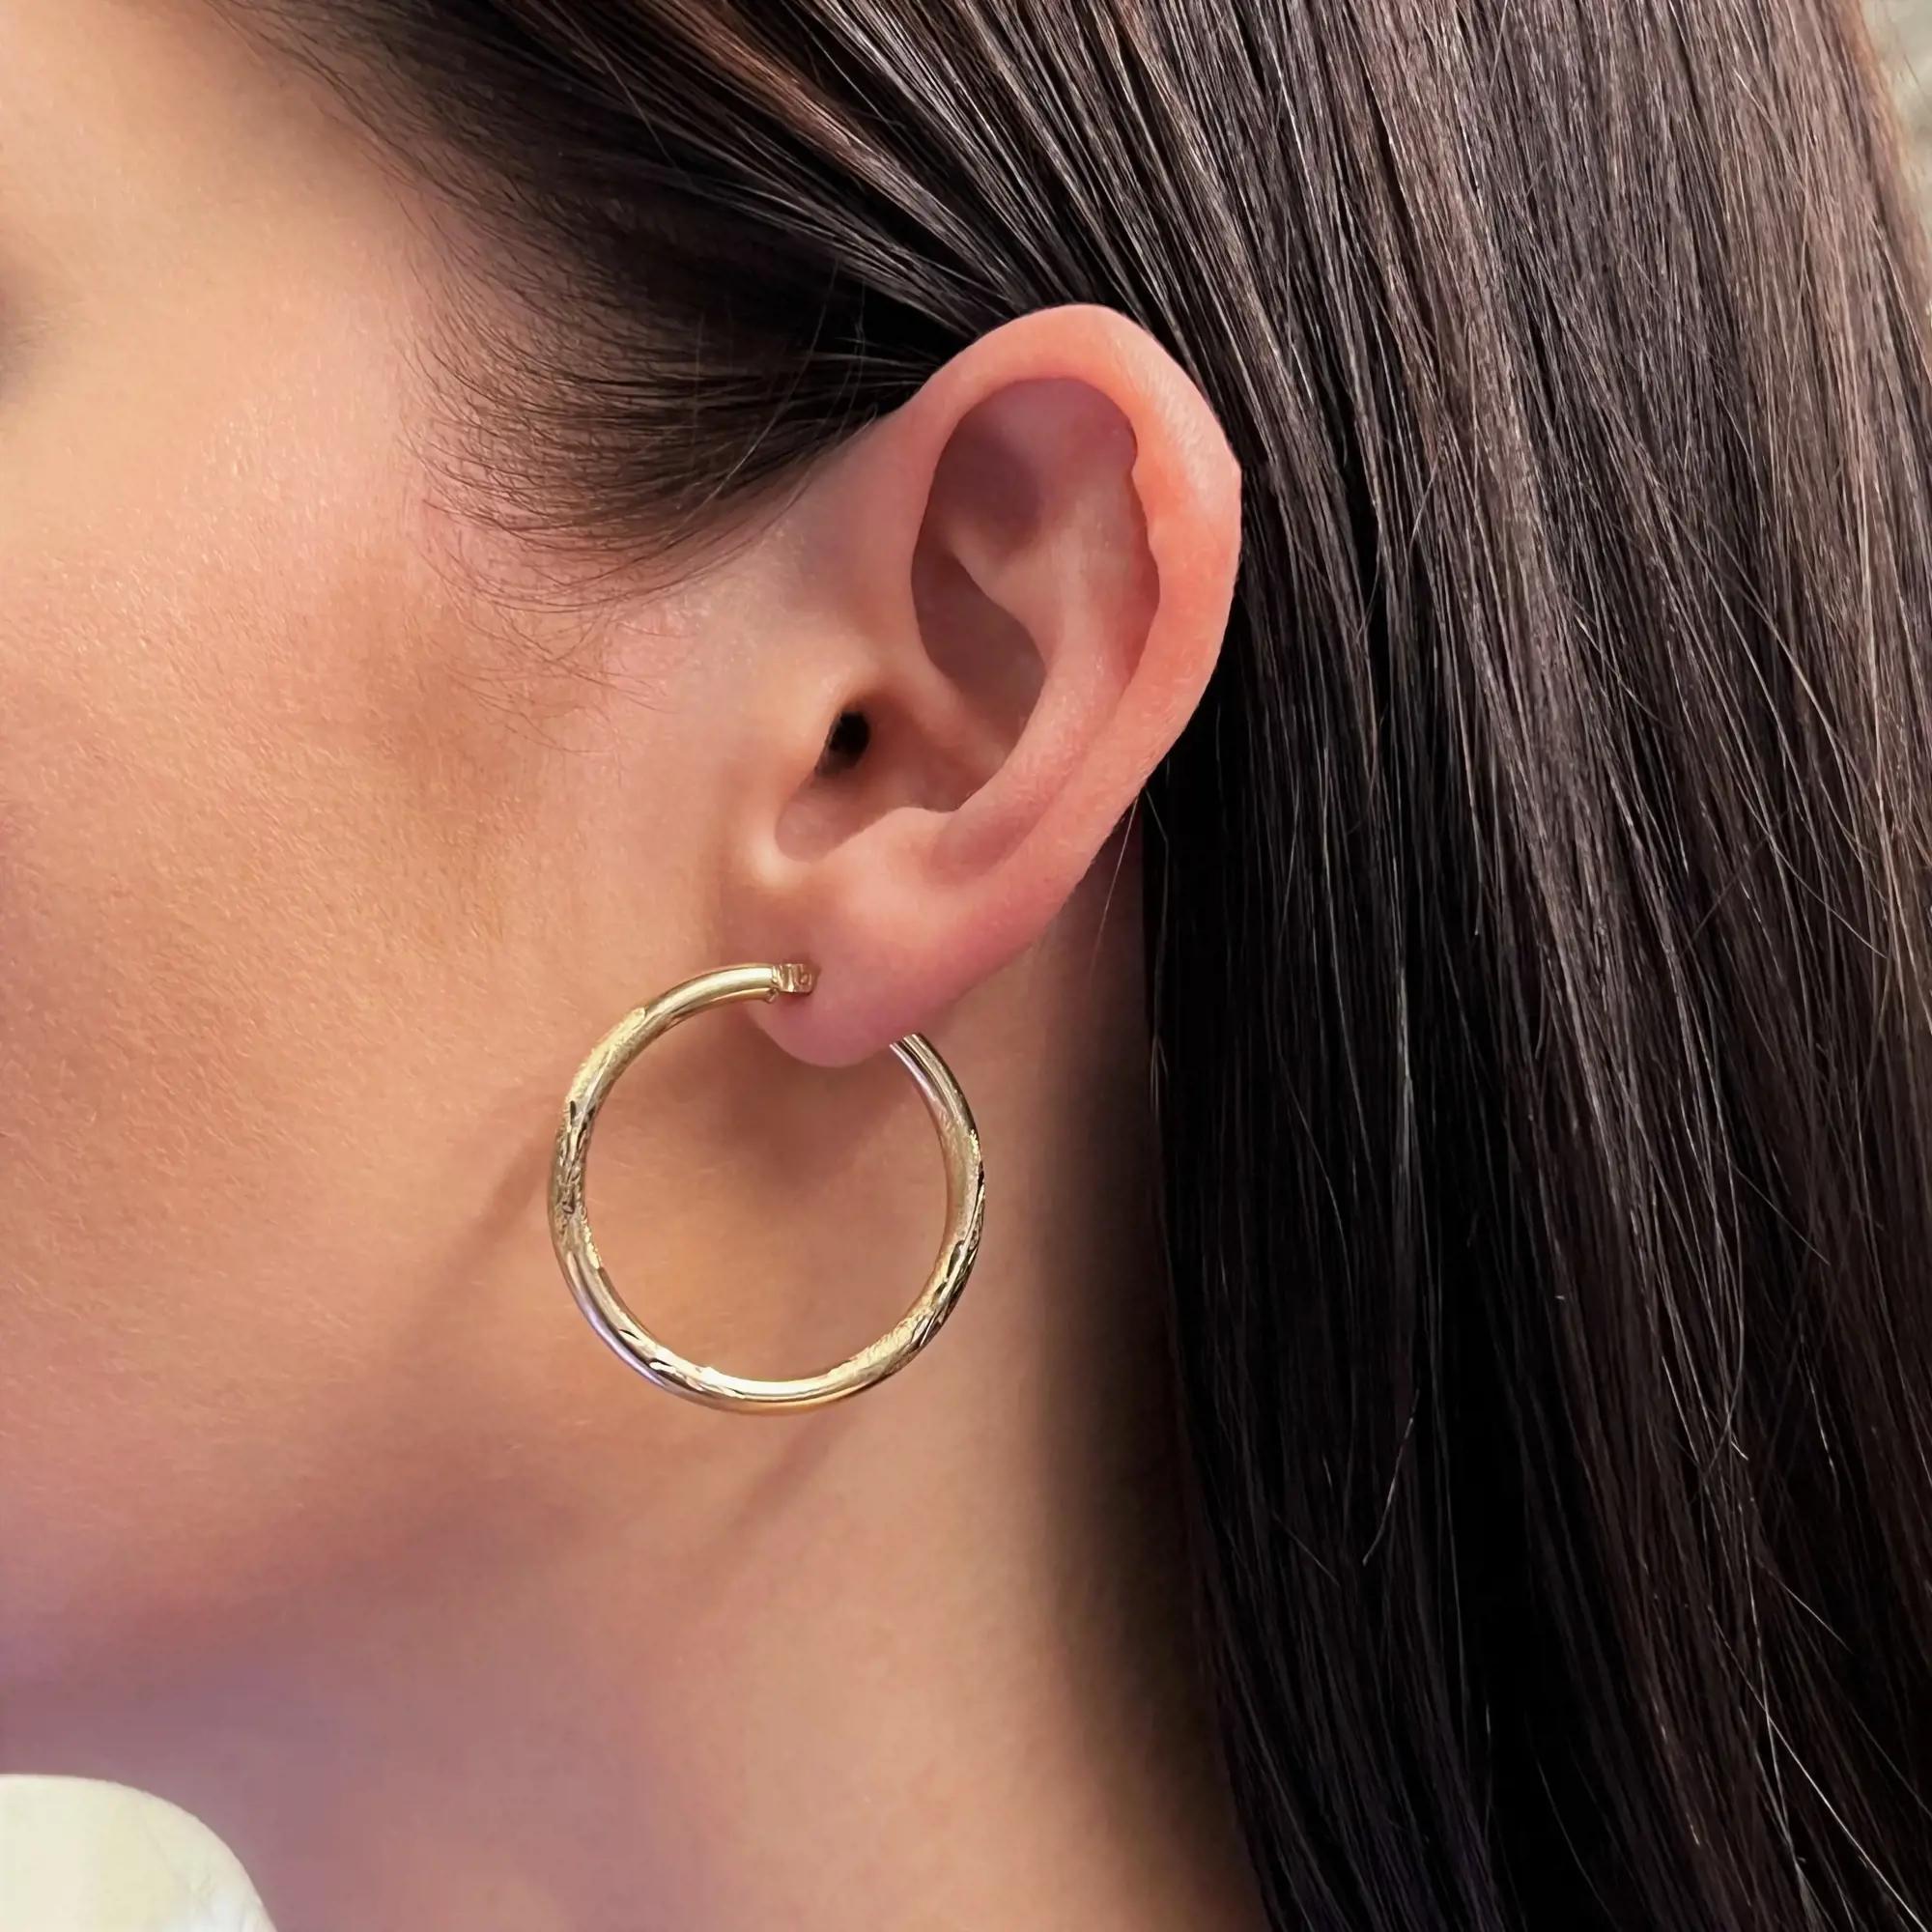 Rachel Koen Textured Medium Round Hoop Earrings 14k Yellow Gold In Excellent Condition For Sale In New York, NY